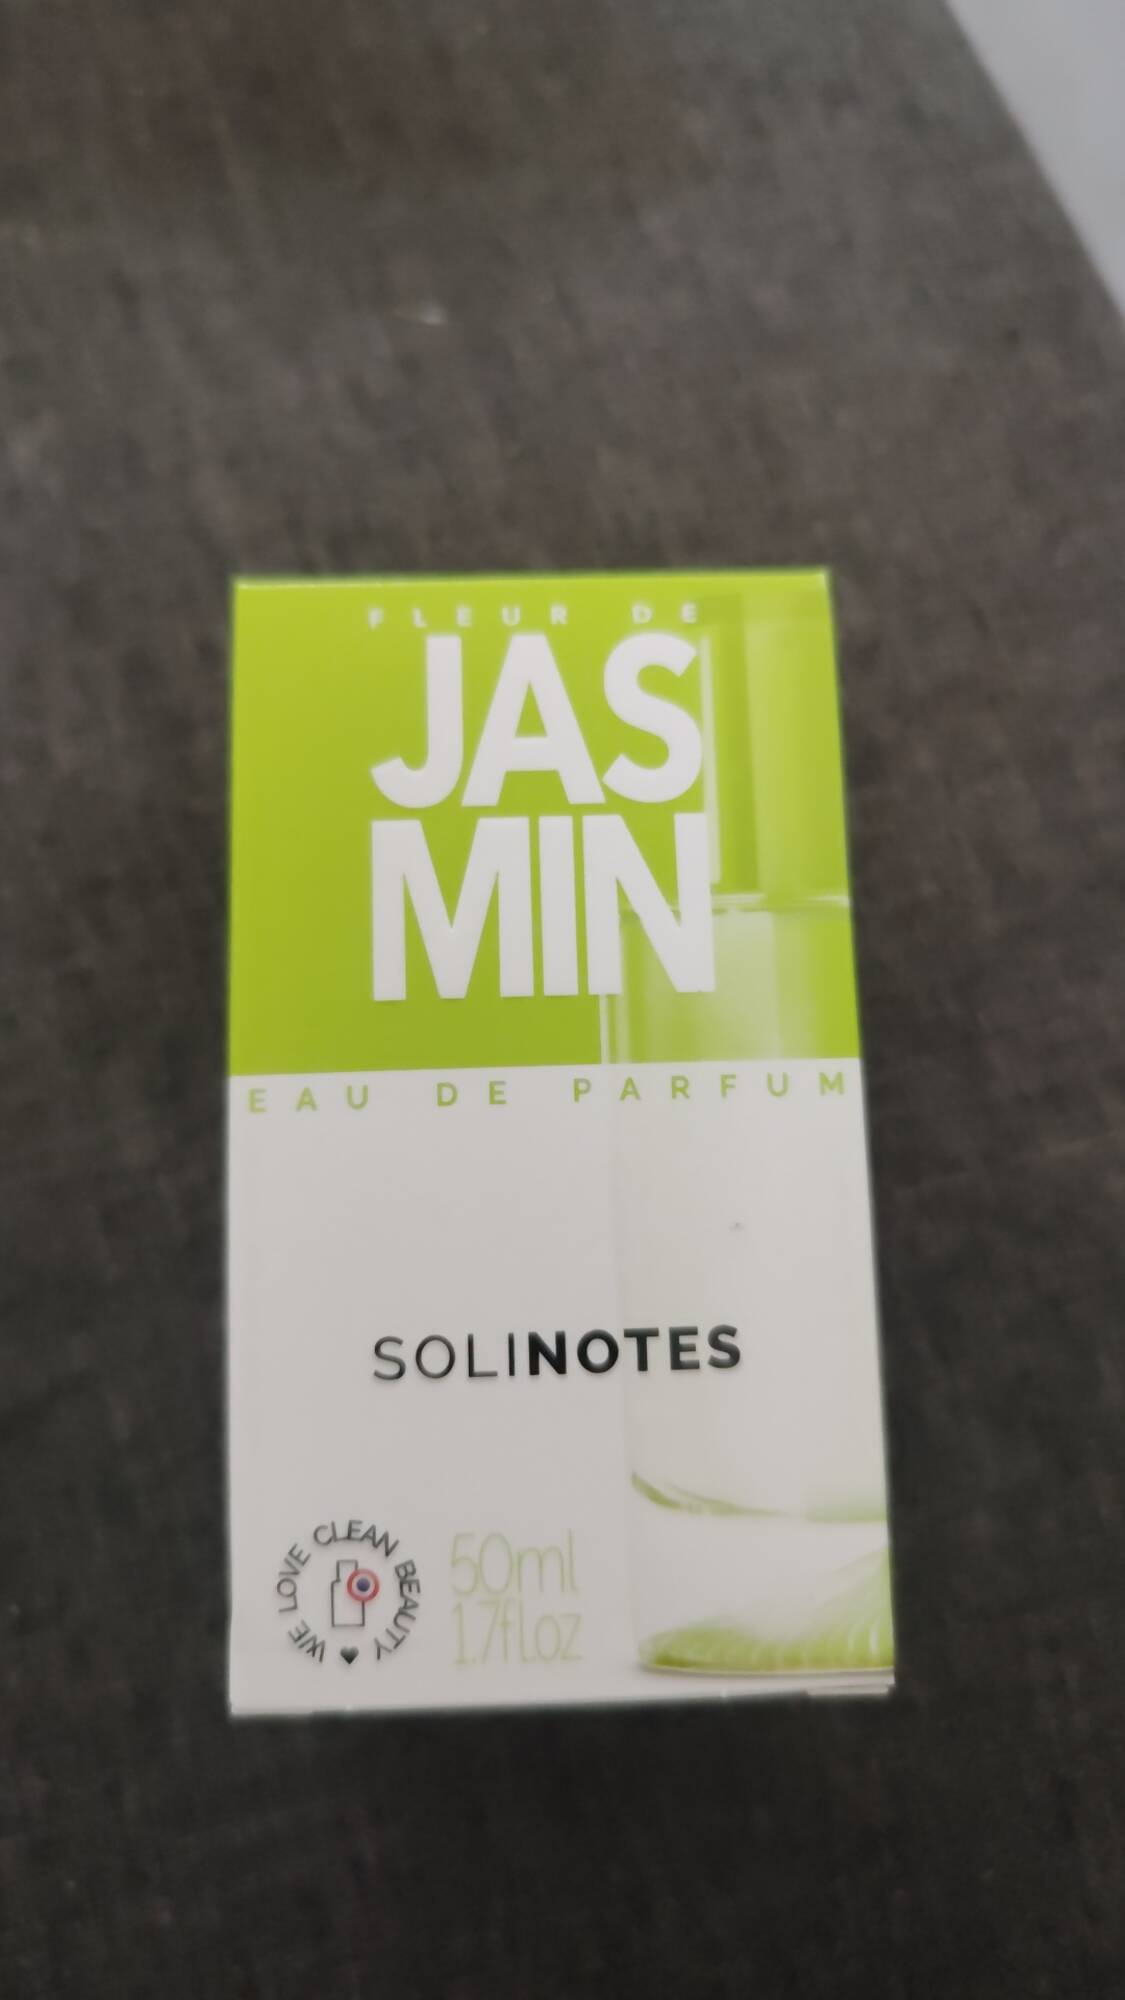 SOLINOTES - Fleur de jasmin - Eau de parfum 